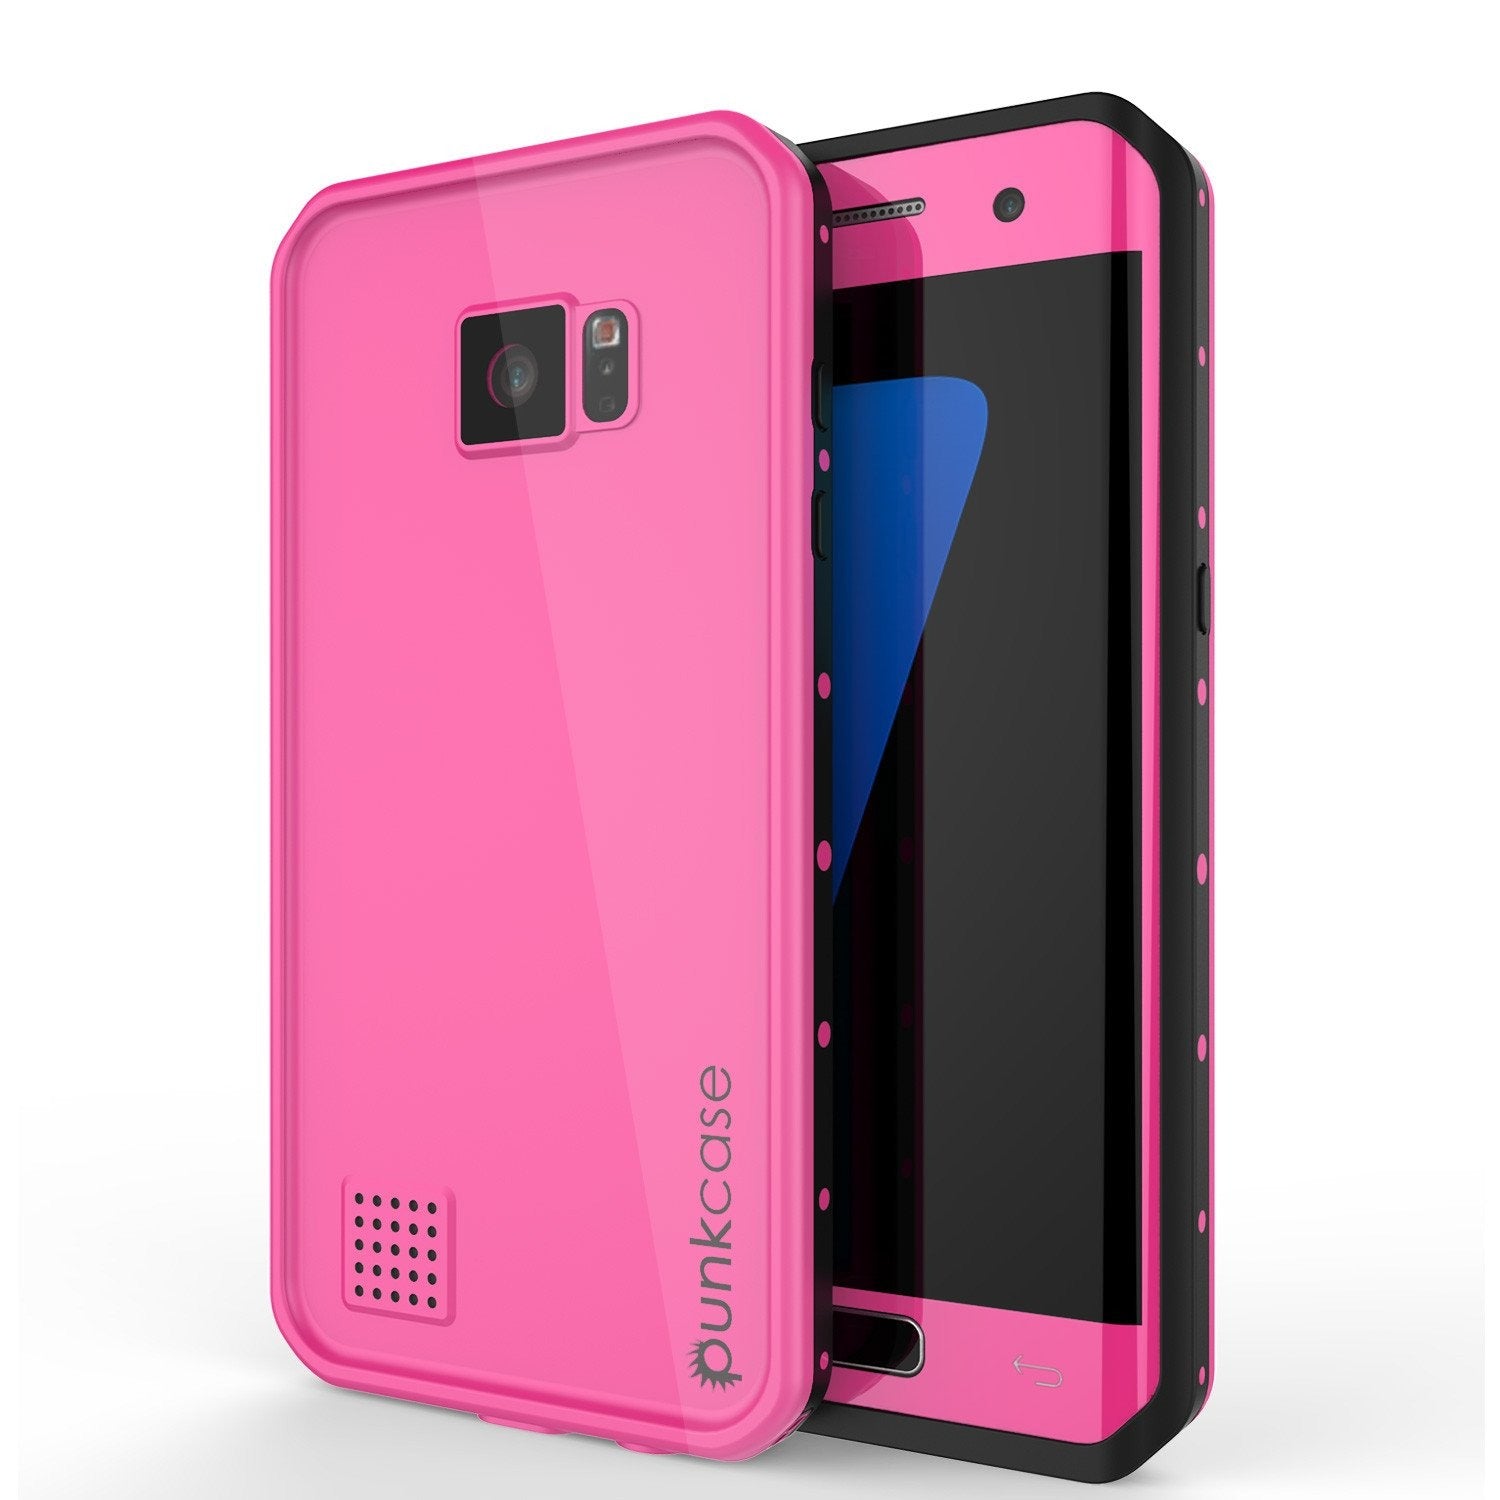 Galaxy S7 EDGE Waterproof Case PunkCase StudStar Pink Thin 6.6ft Underwater IP68 Shock/Snow Proof